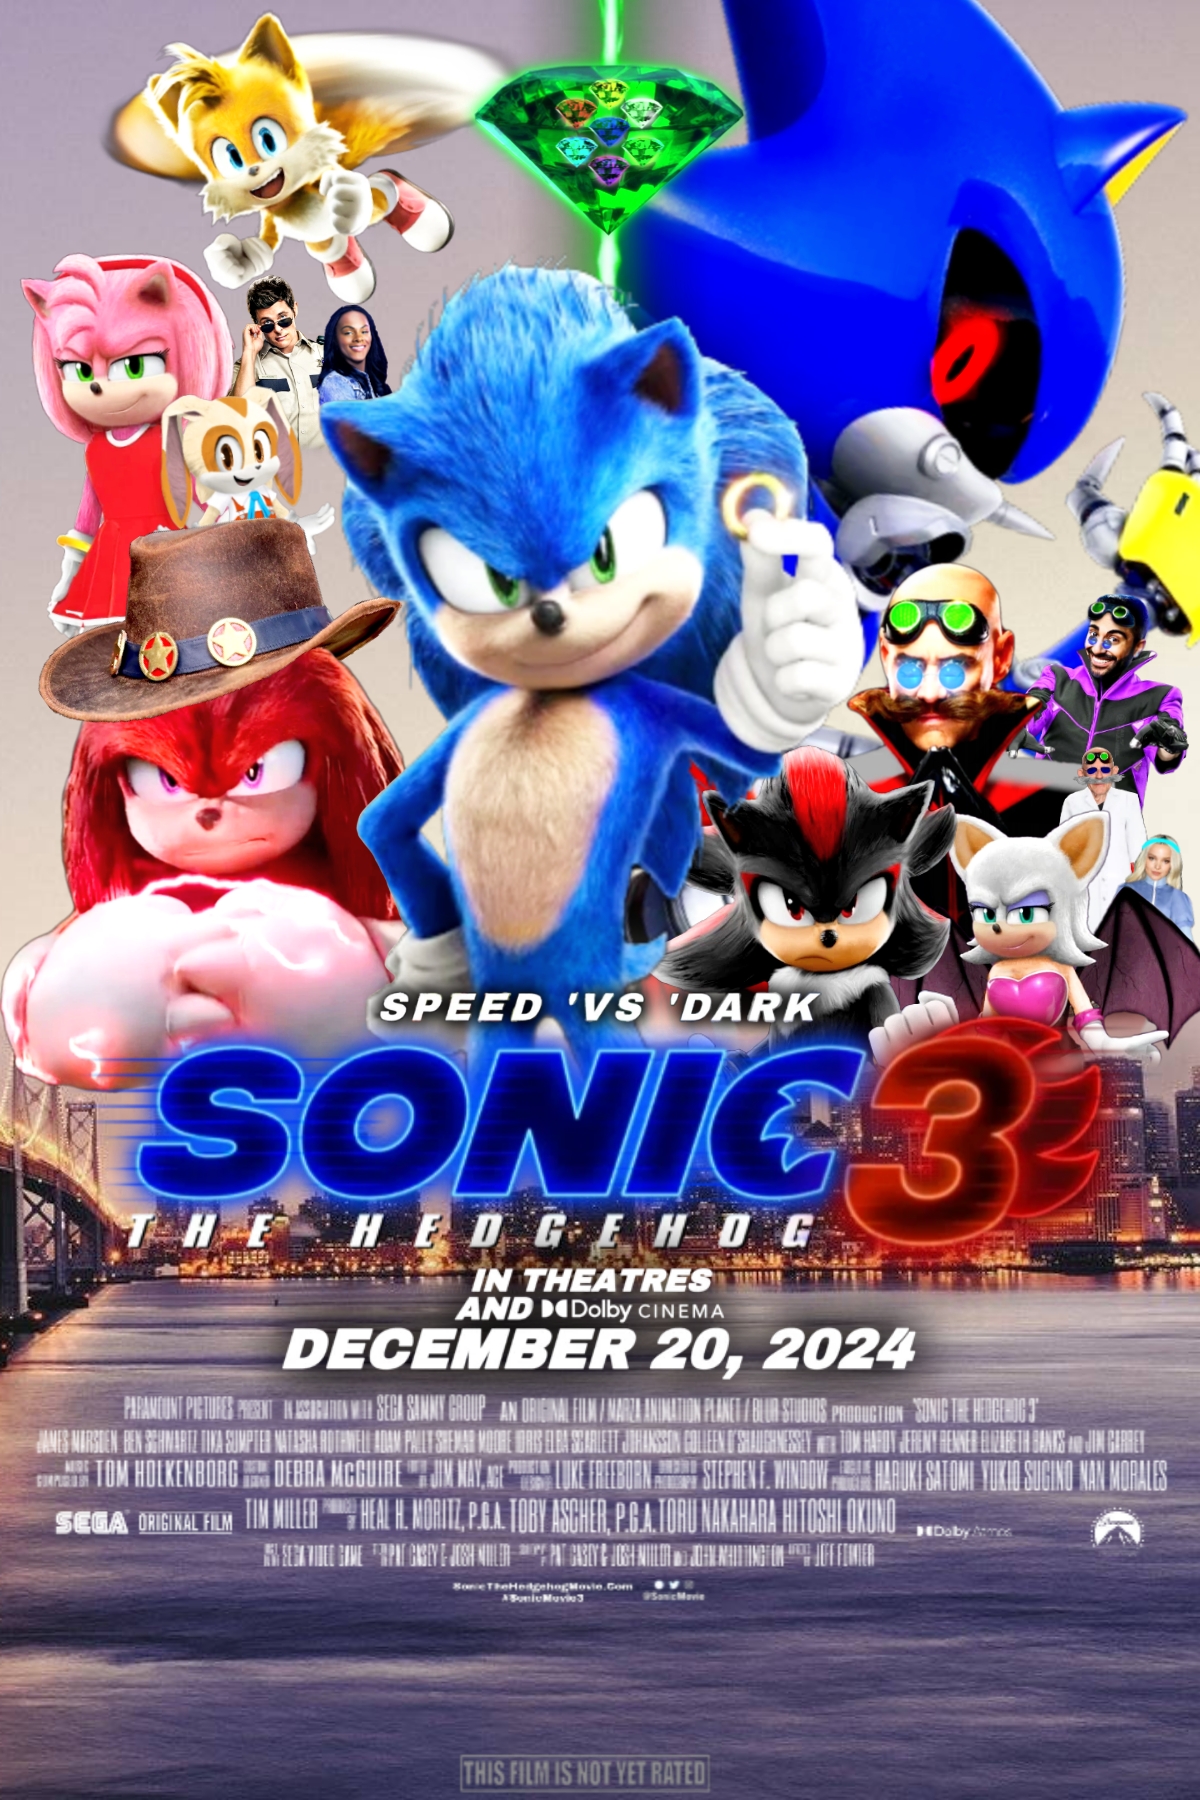 Sonic Prime season 3 custom poster #4 by Nikisawesom on DeviantArt